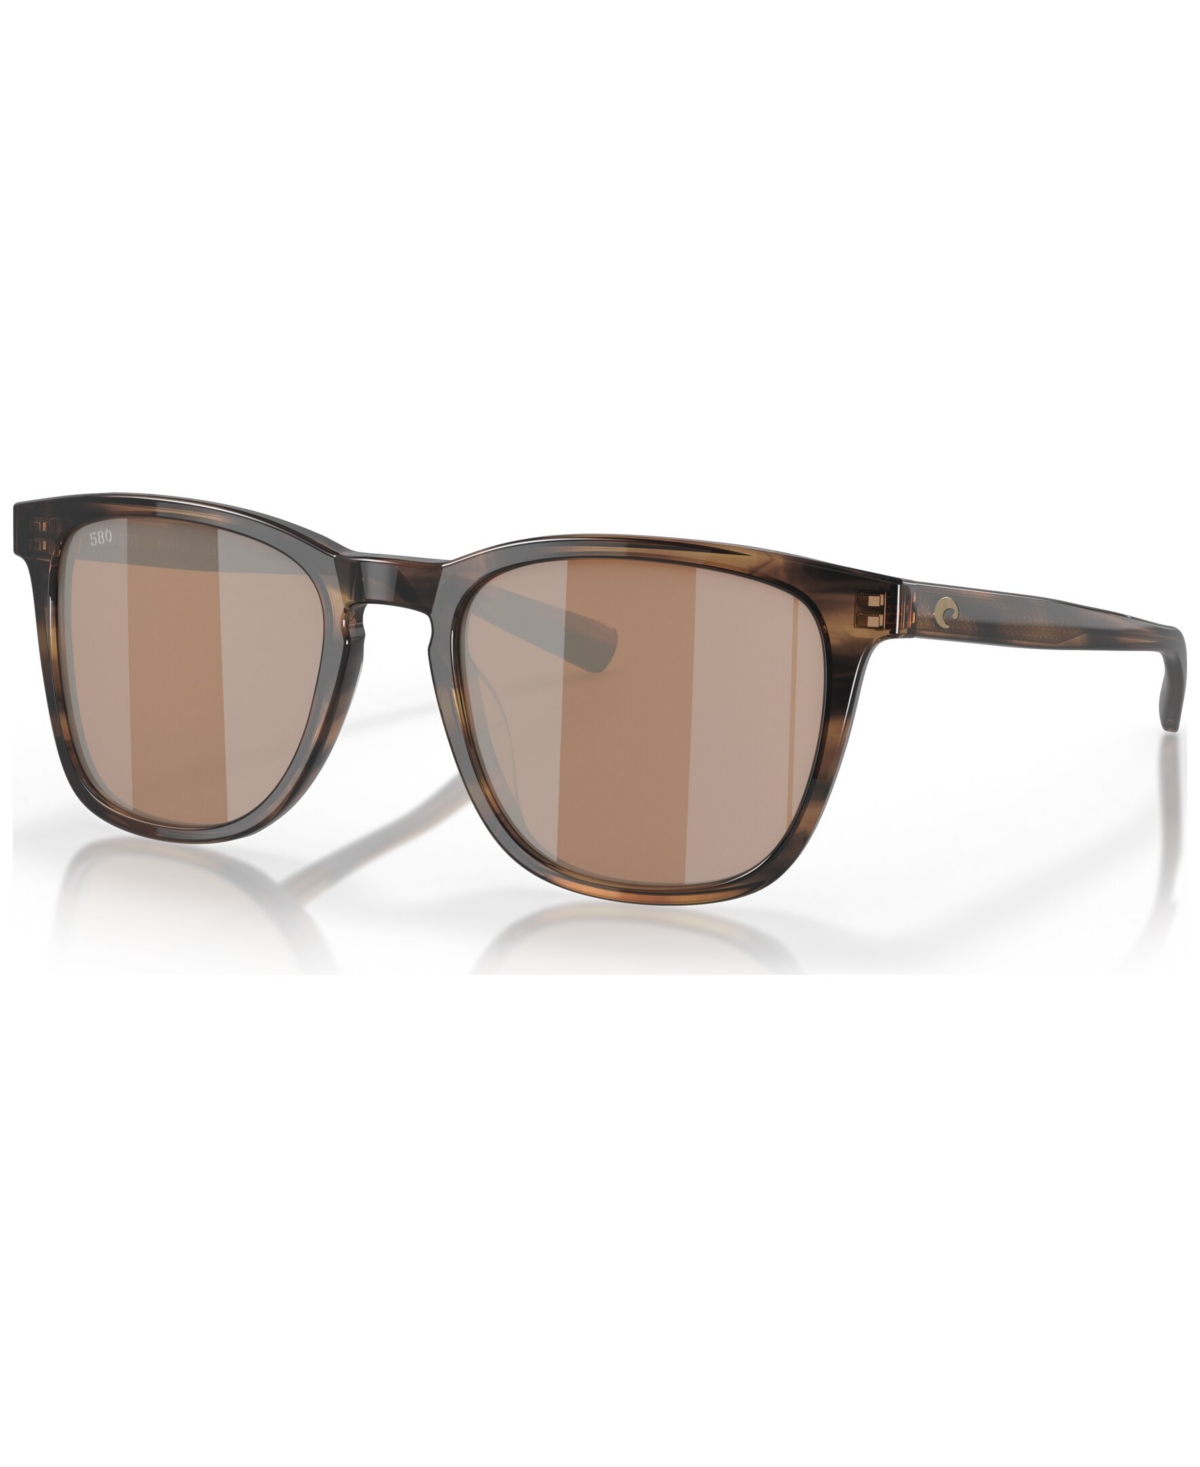 Unisex Polarized Sunglasses, Sullivan - Tortoise